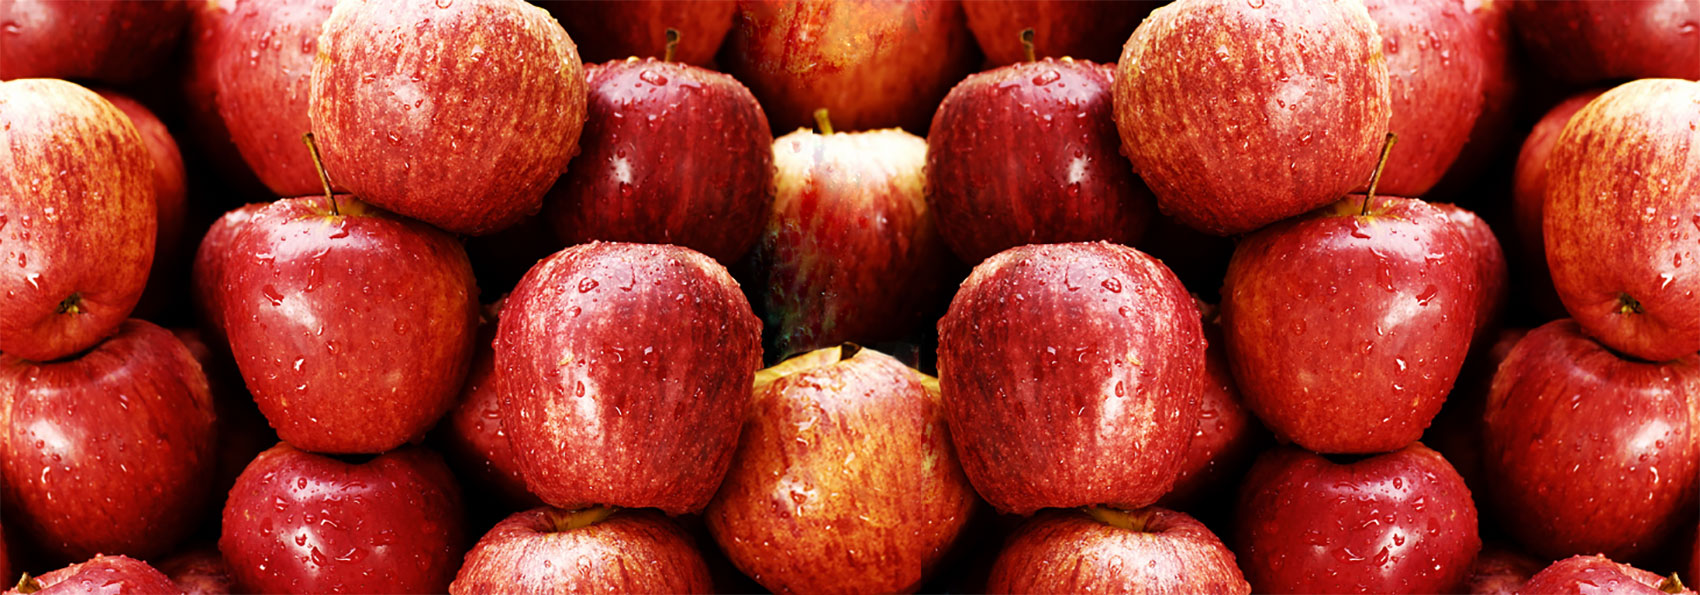 Chilean organic apple exports grow